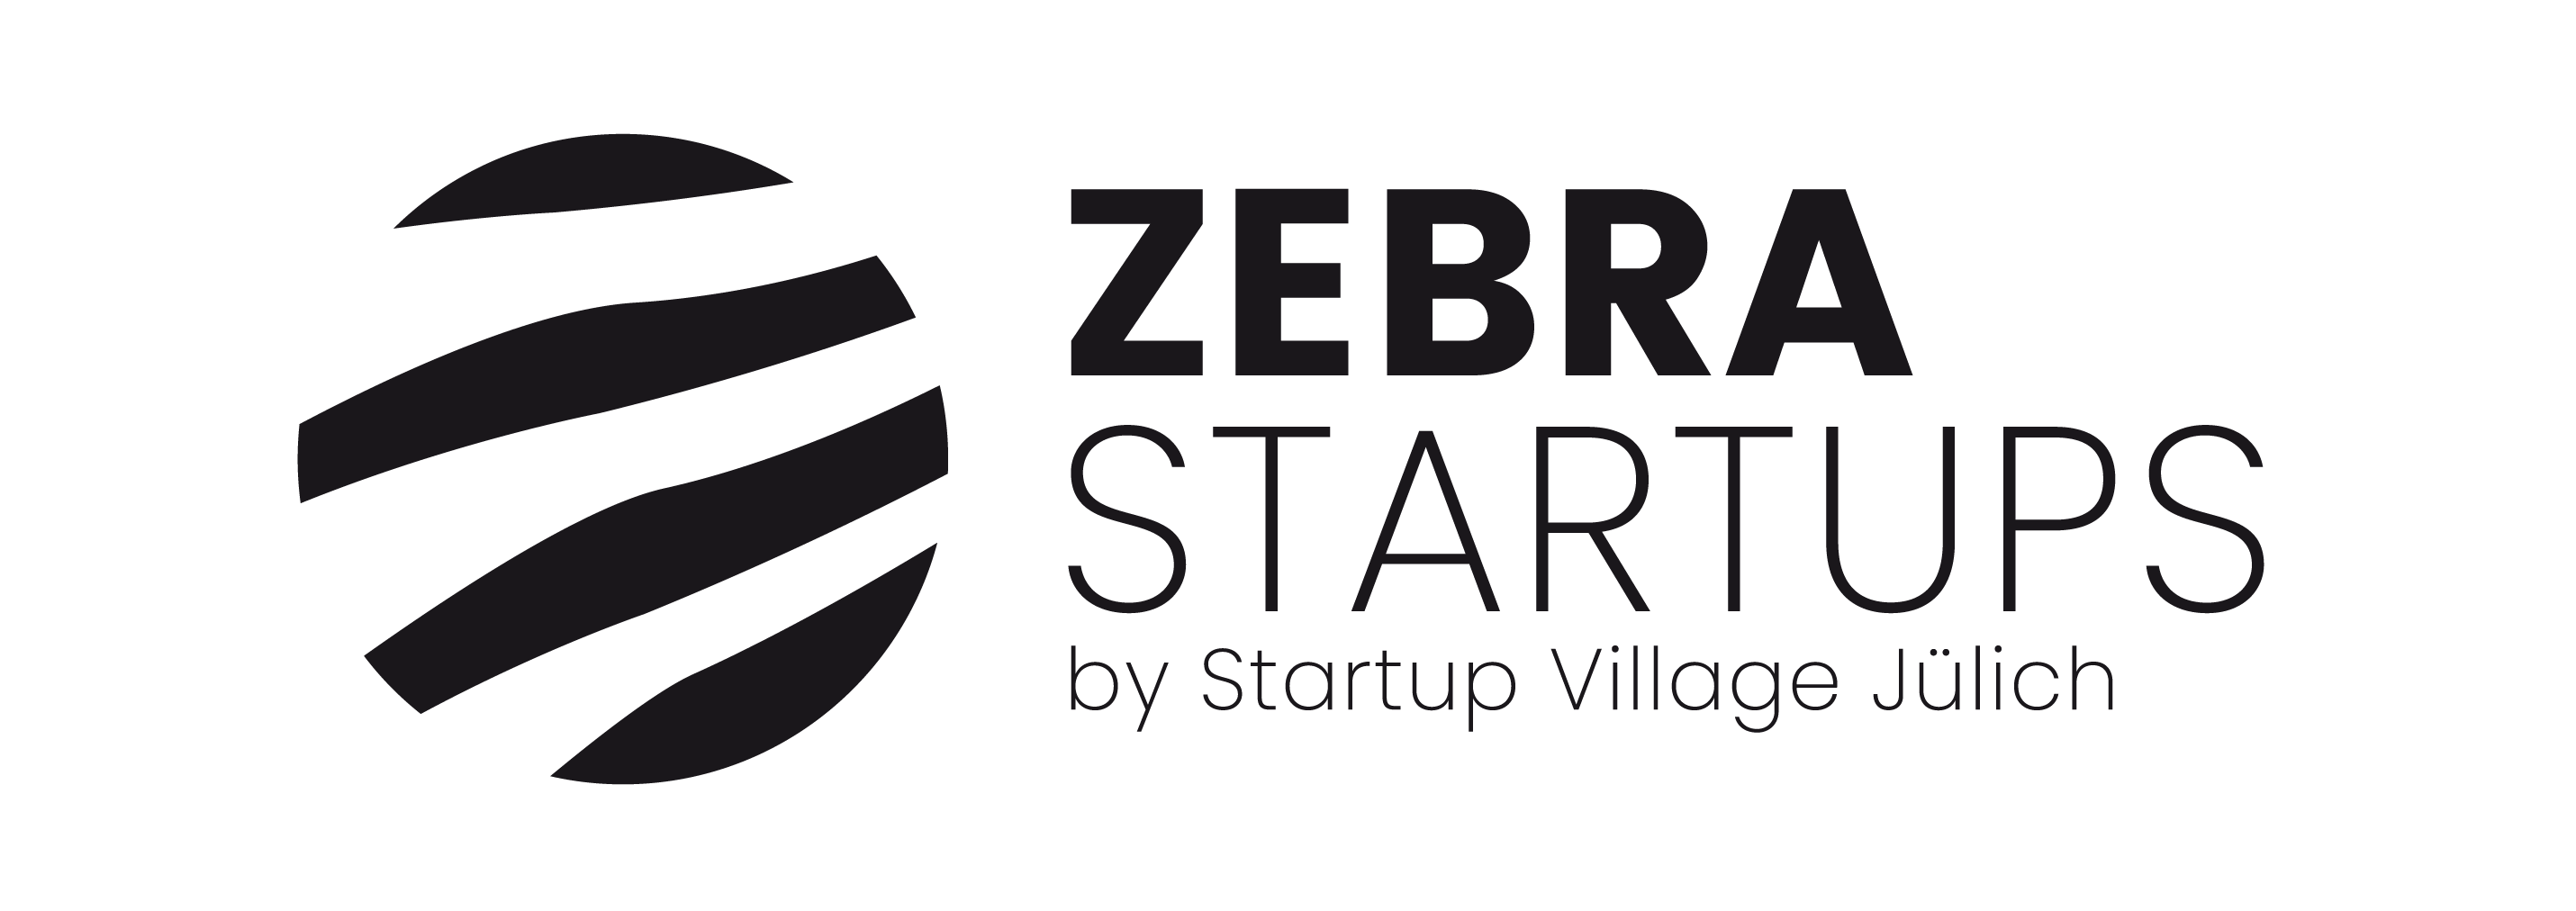 ZEBRA Startups